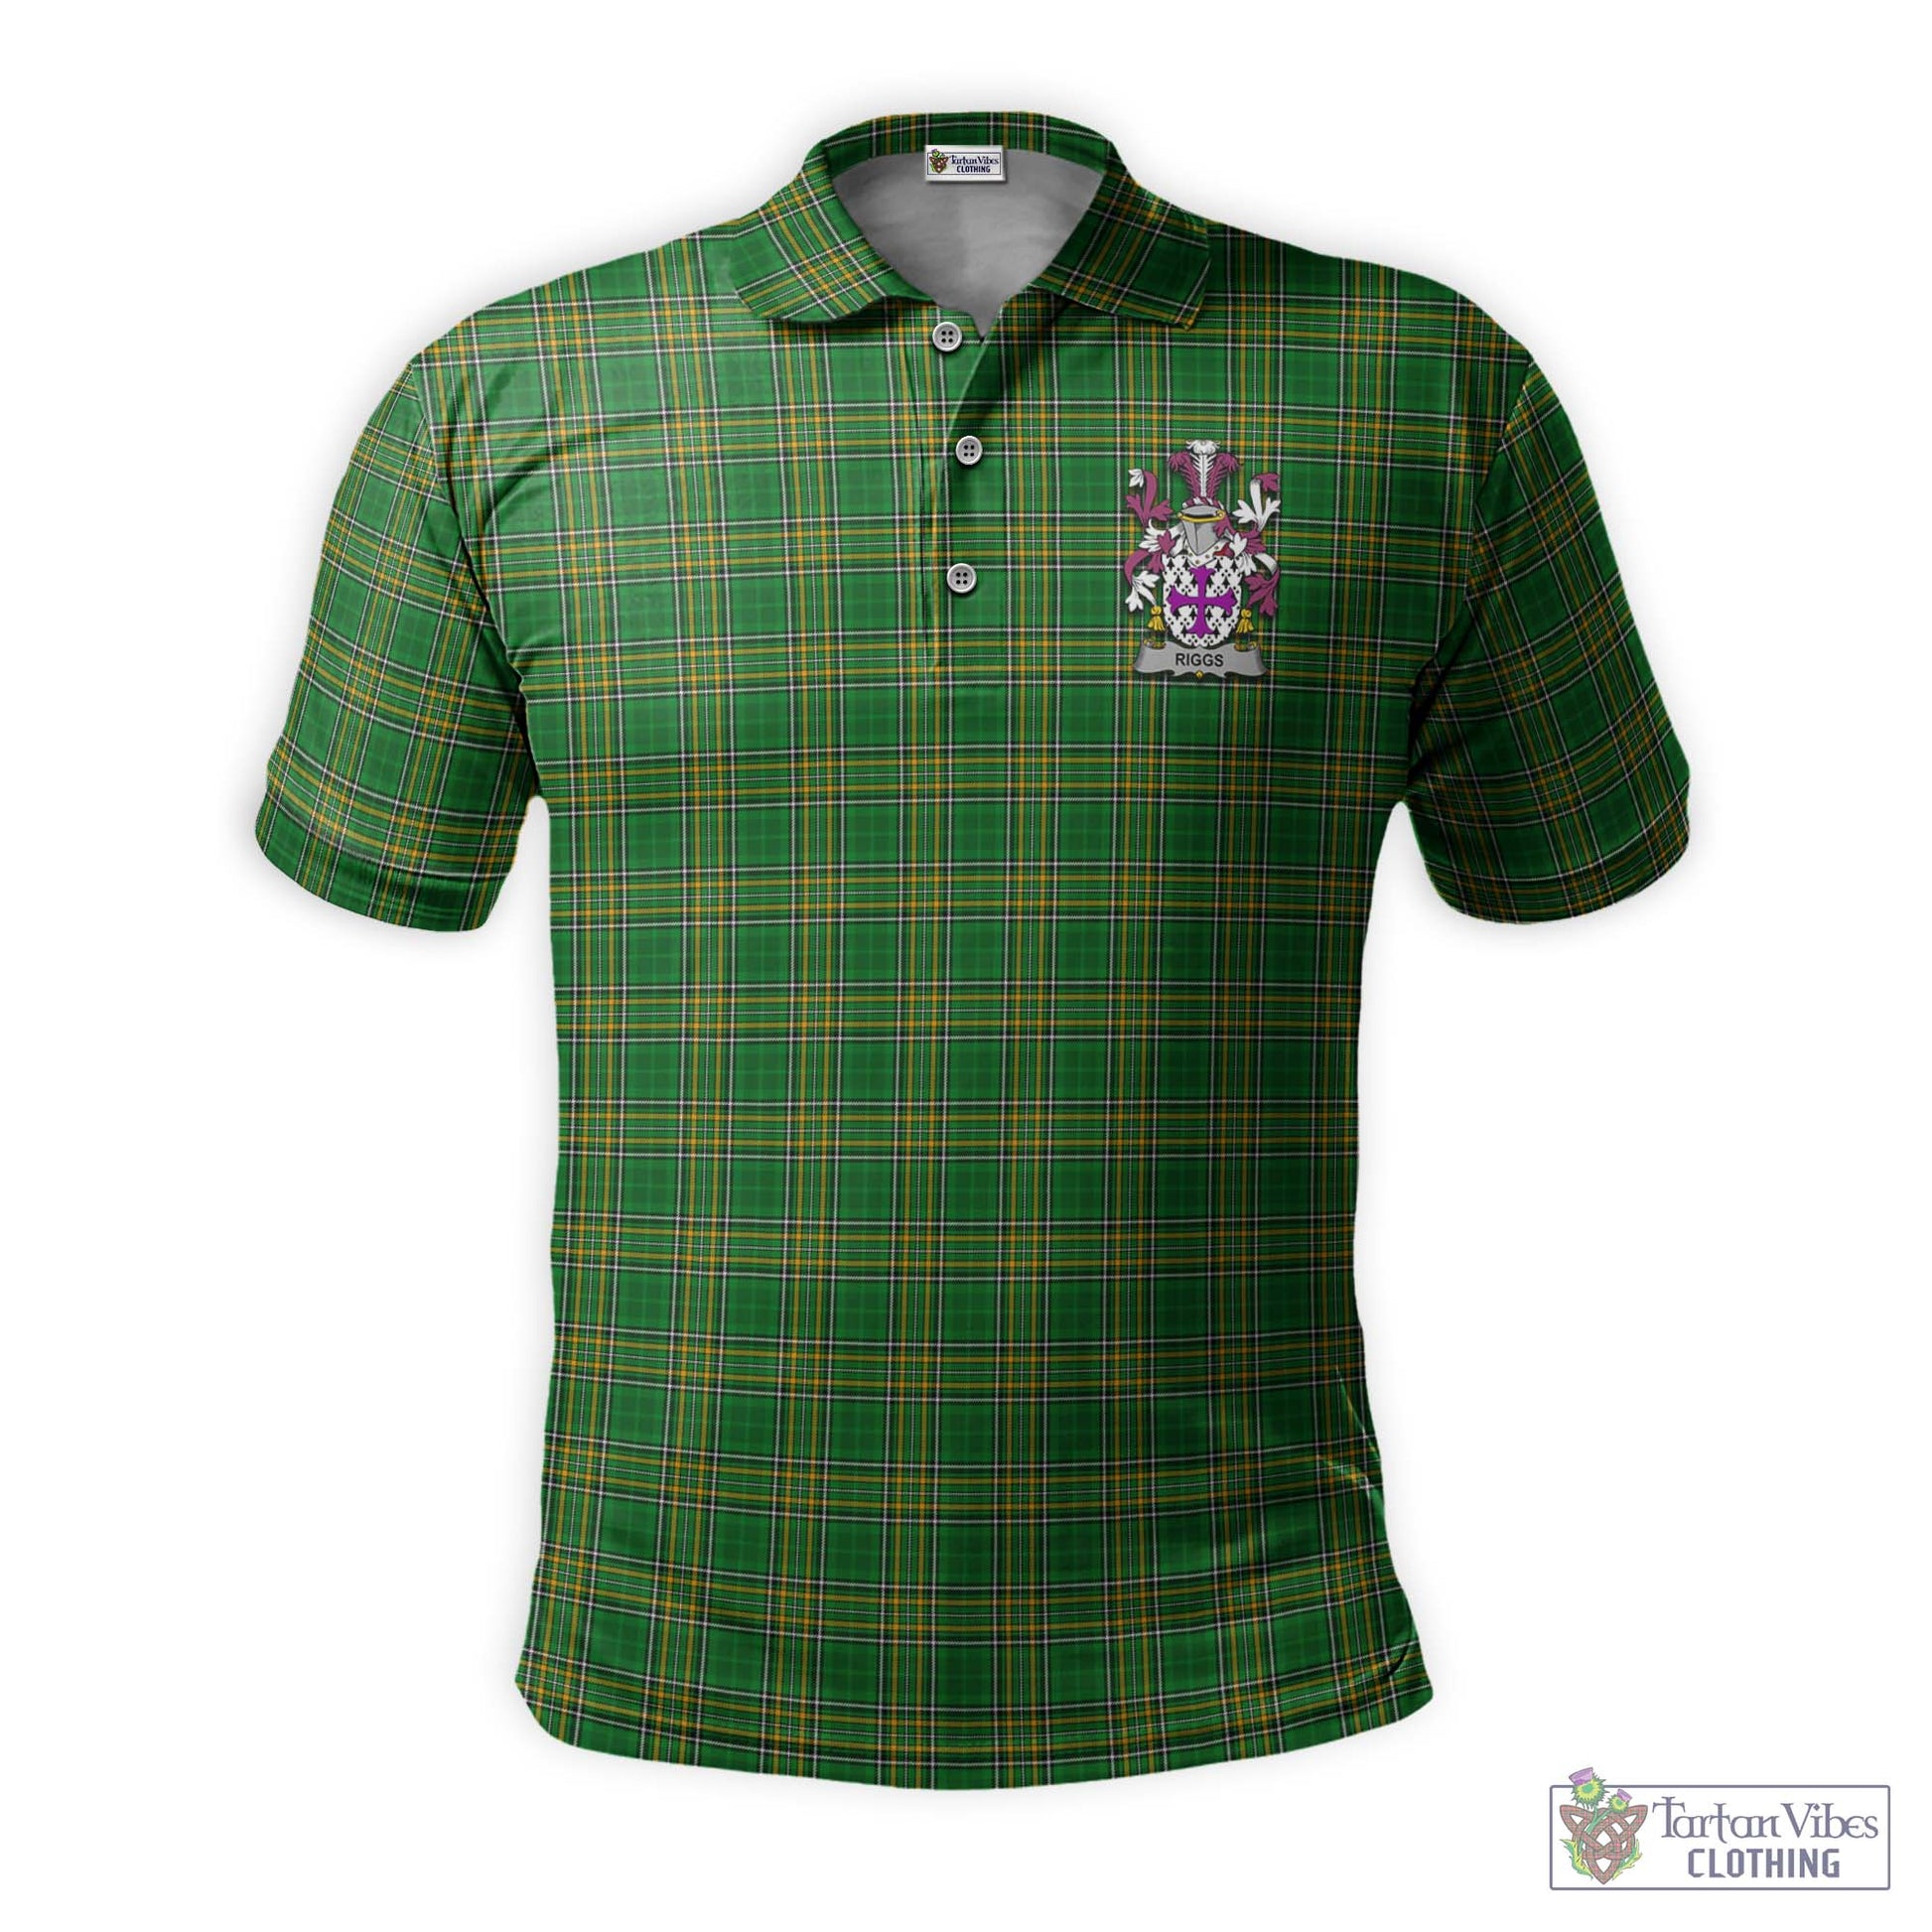 Tartan Vibes Clothing Riggs Ireland Clan Tartan Polo Shirt with Coat of Arms